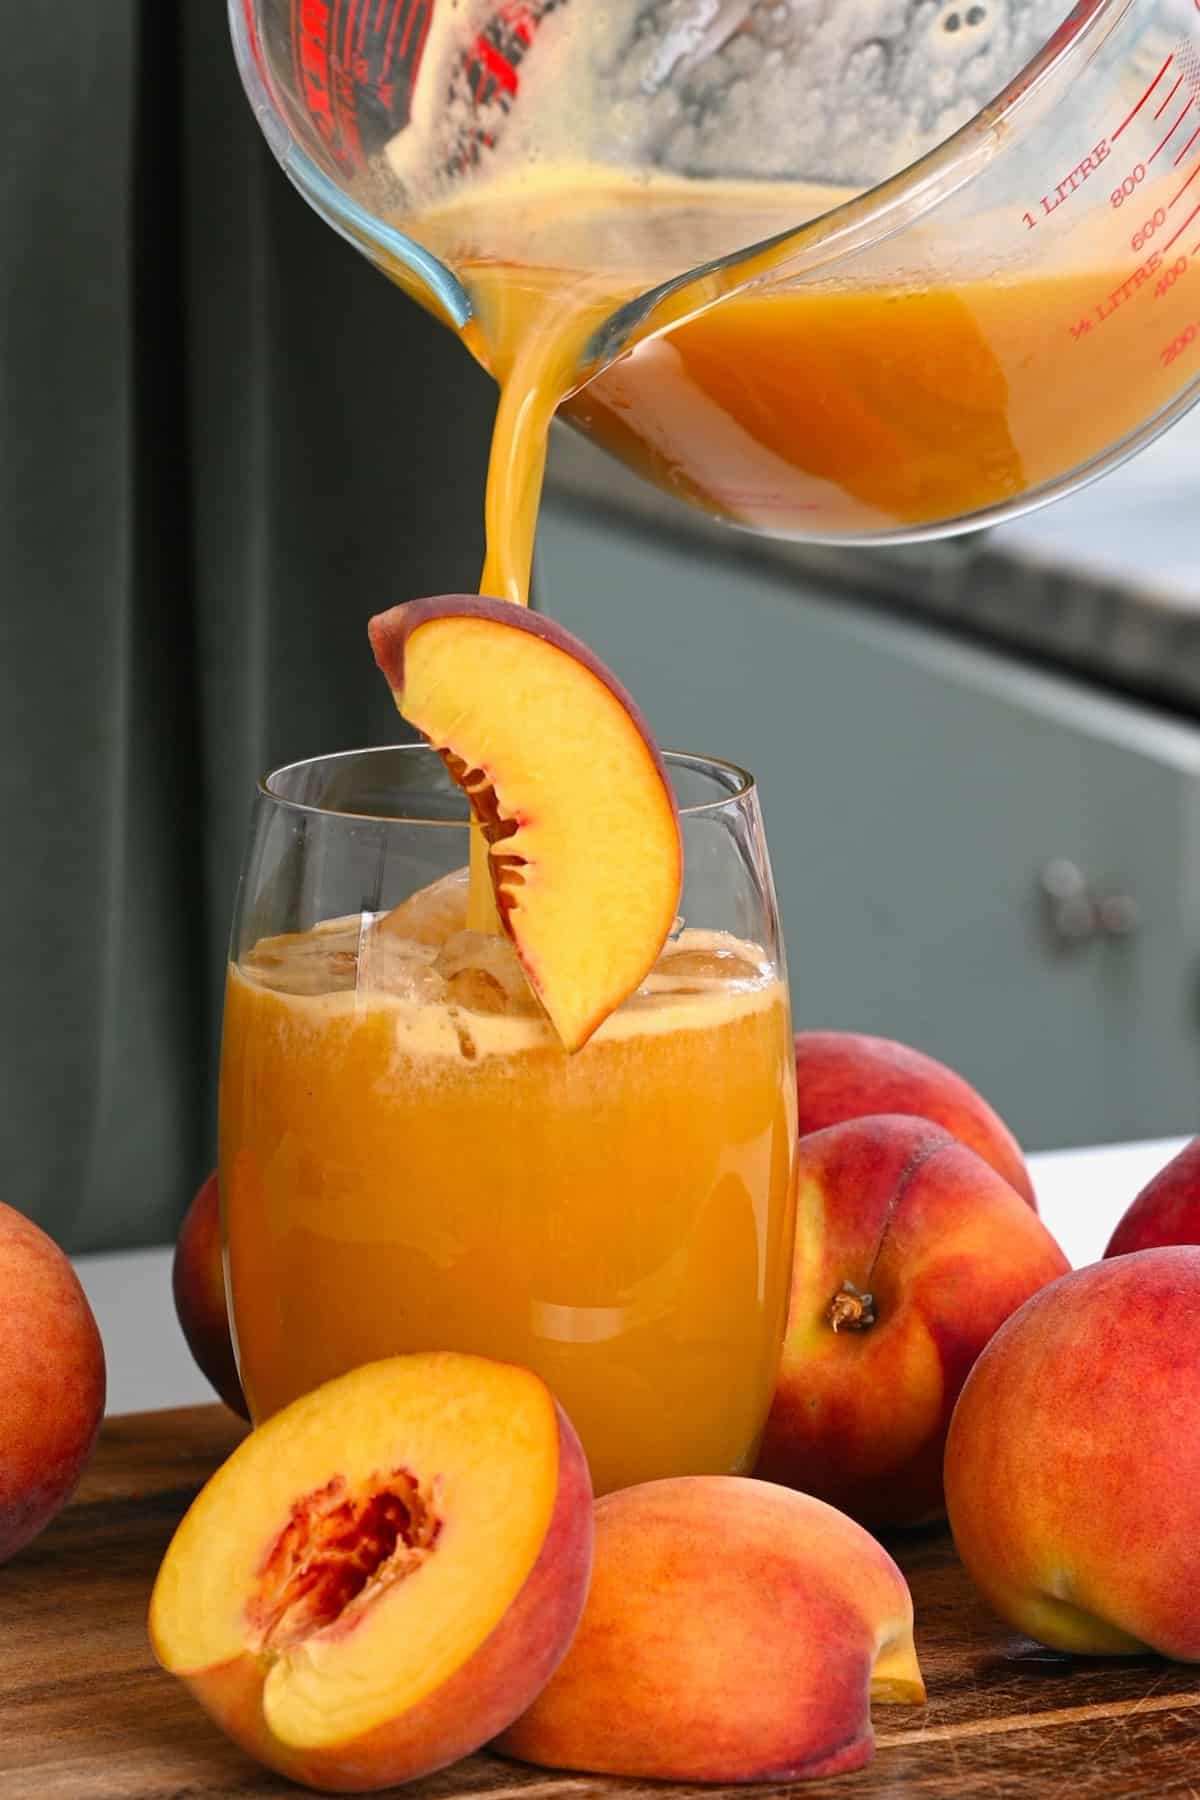 https://www.alphafoodie.com/wp-content/uploads/2022/03/How-to-Make-Peach-Juice-Main1.jpeg